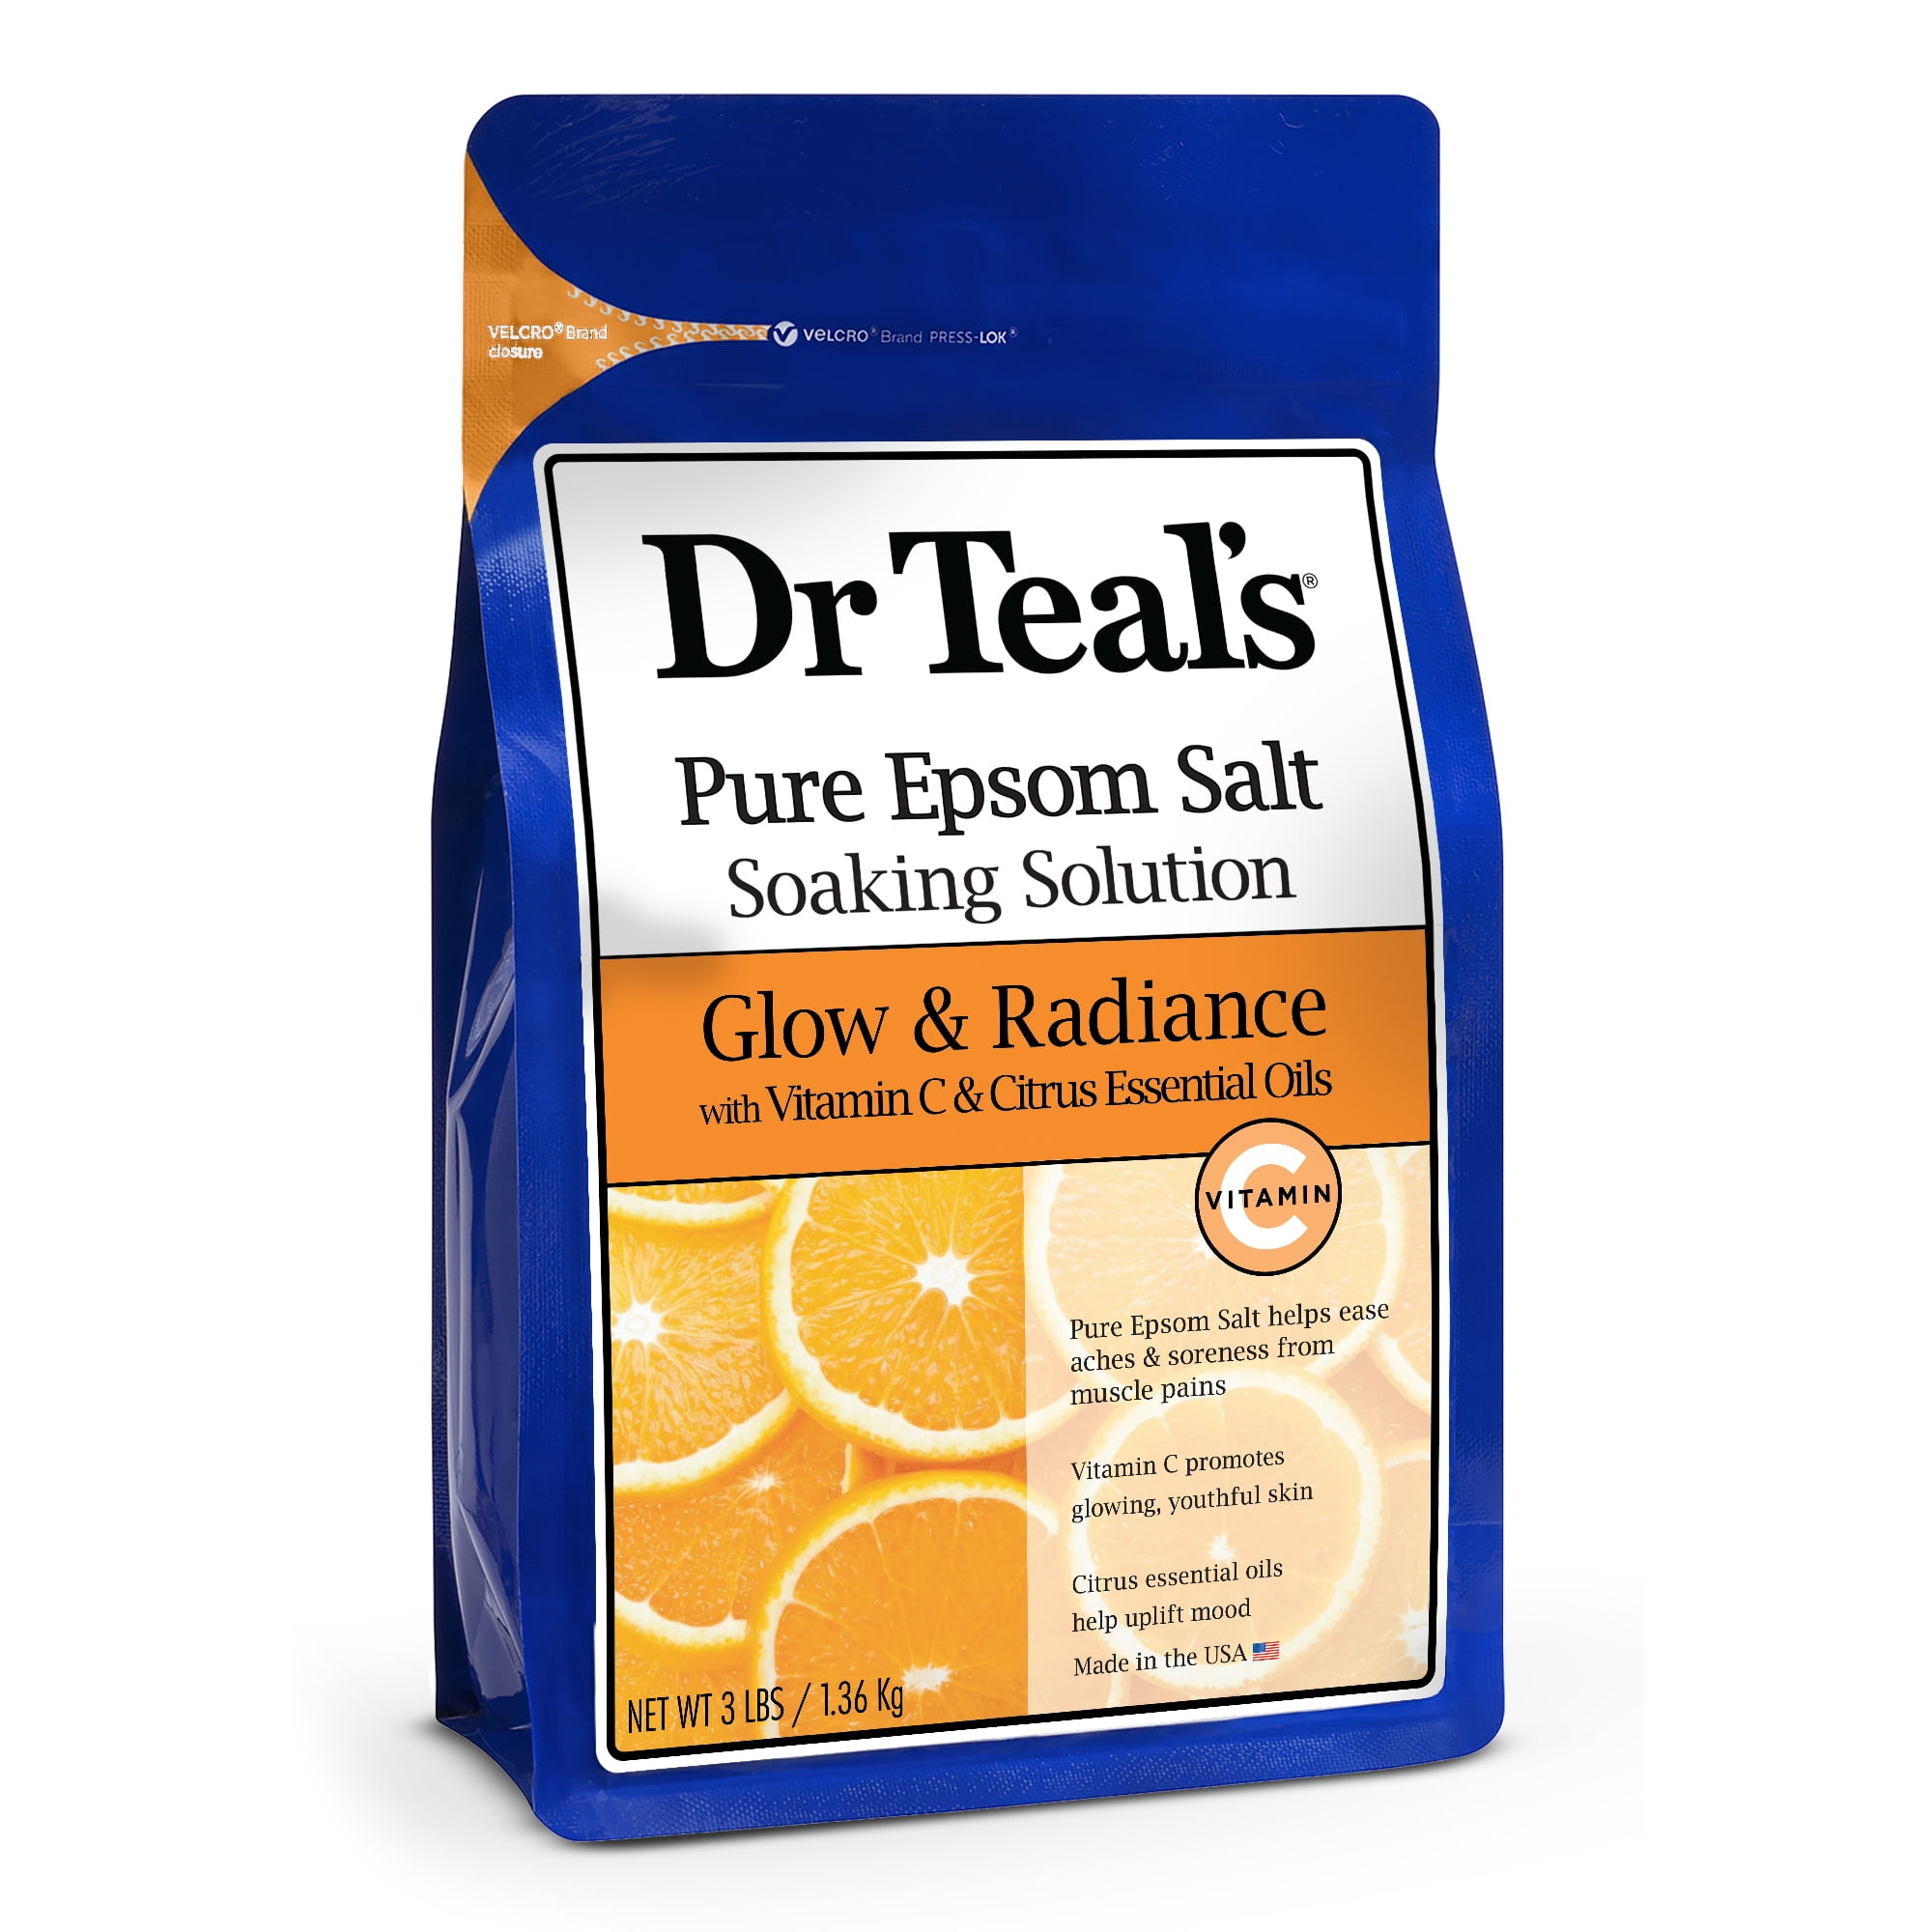 Dr Teal's Pure Epsom Salt Soak, Glow & Radiance with Vitamin C & Citrus Essential Oils, 3 lbs